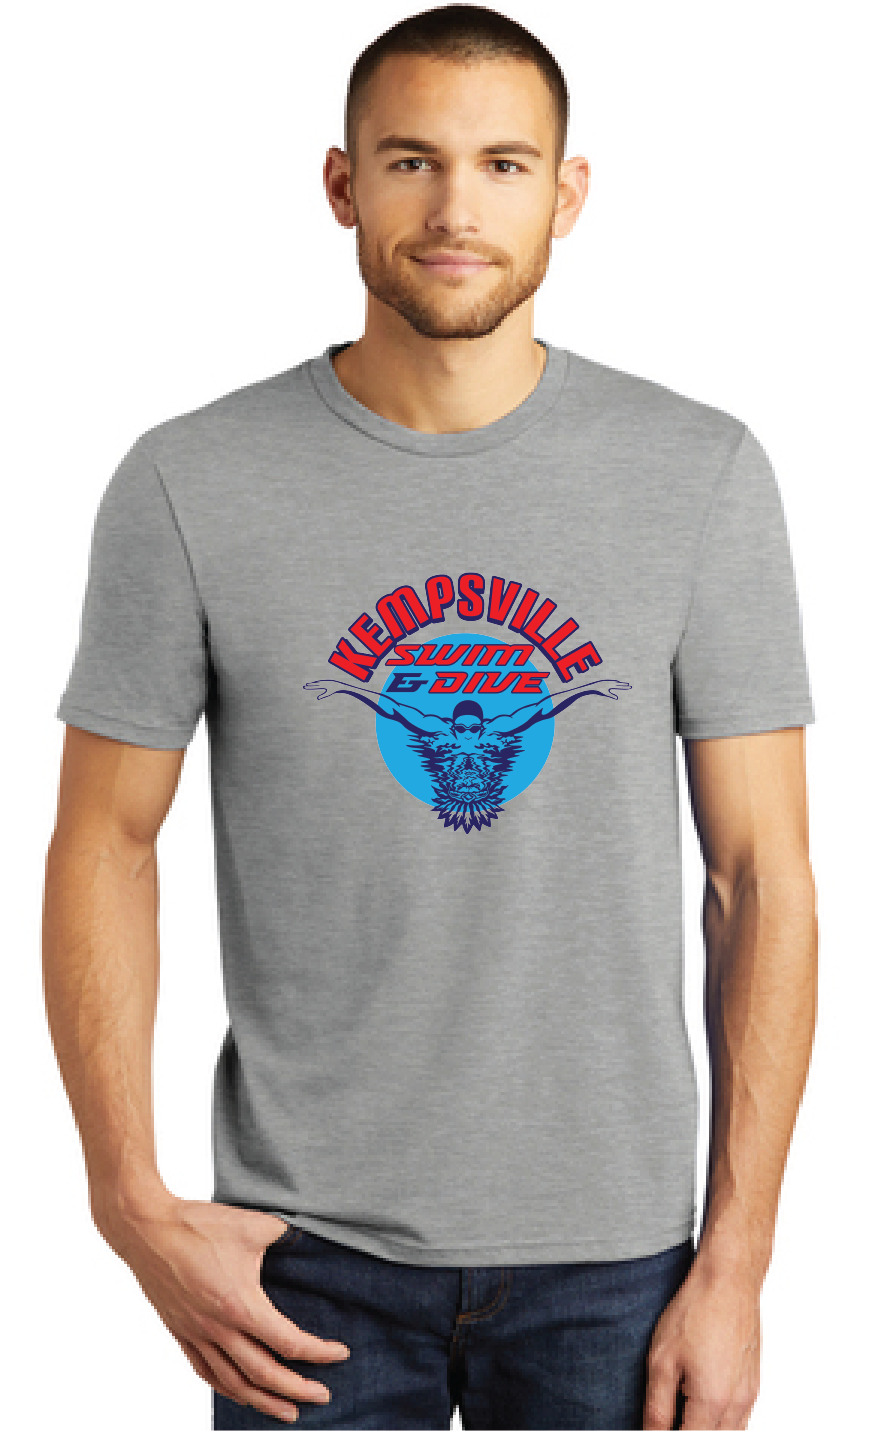 Adidas Sport T-Shirt / Heathered Grey / Kempsville High School Swim and Dive Team